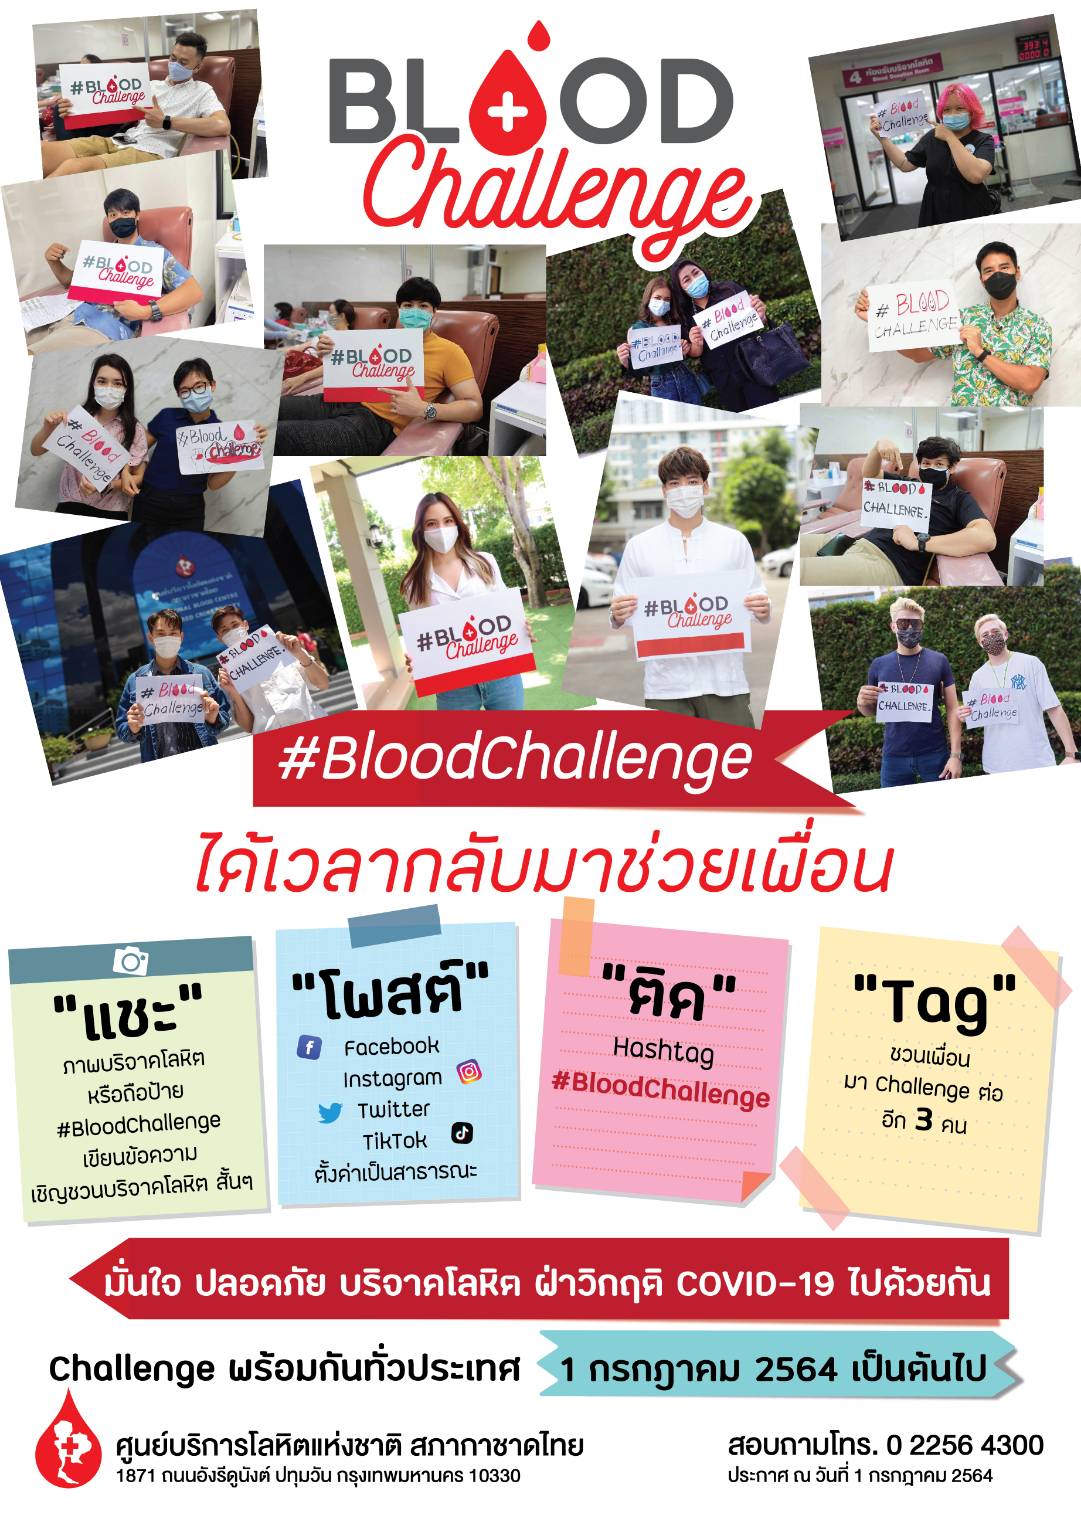 Blood Challenge ได้เวลากลับมาช่วยเพื่อน บริจาคโลหิต ฝ่าวิกฤติ COVID-19